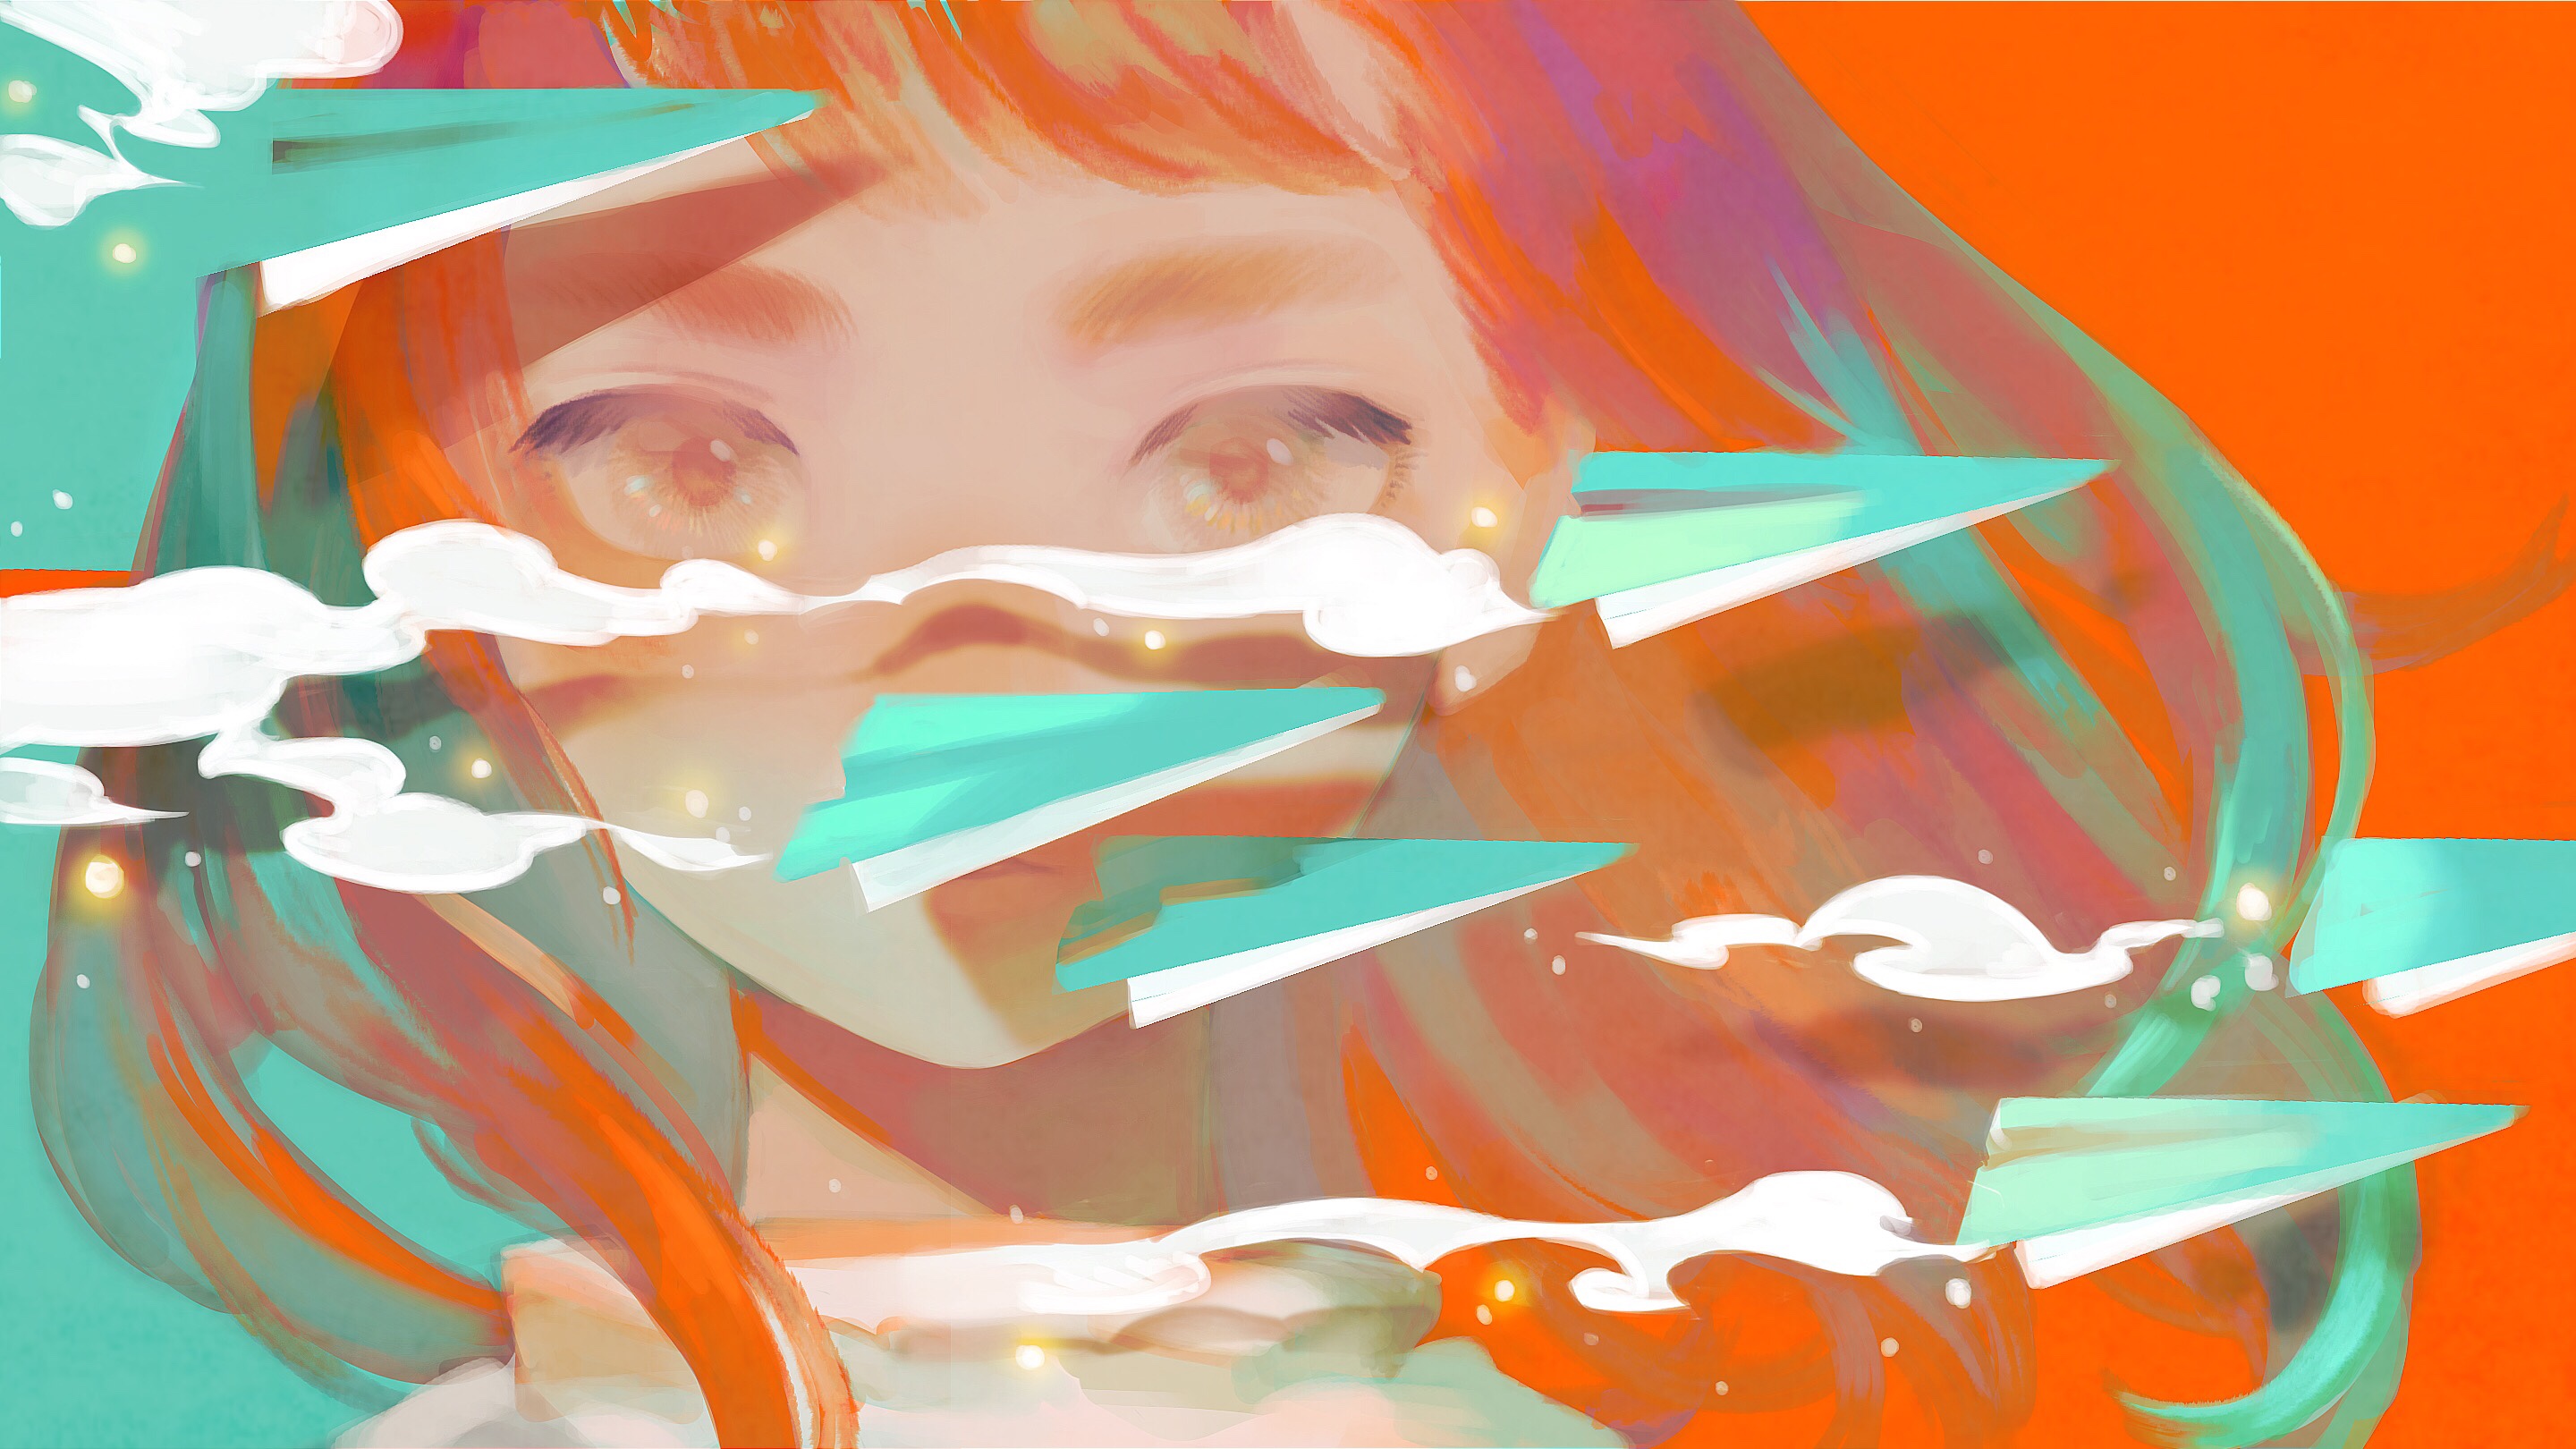 Anime 2880x1620 anime anime girls paper planes long hair redhead multi-colored hair smoke long eyelashes orange background